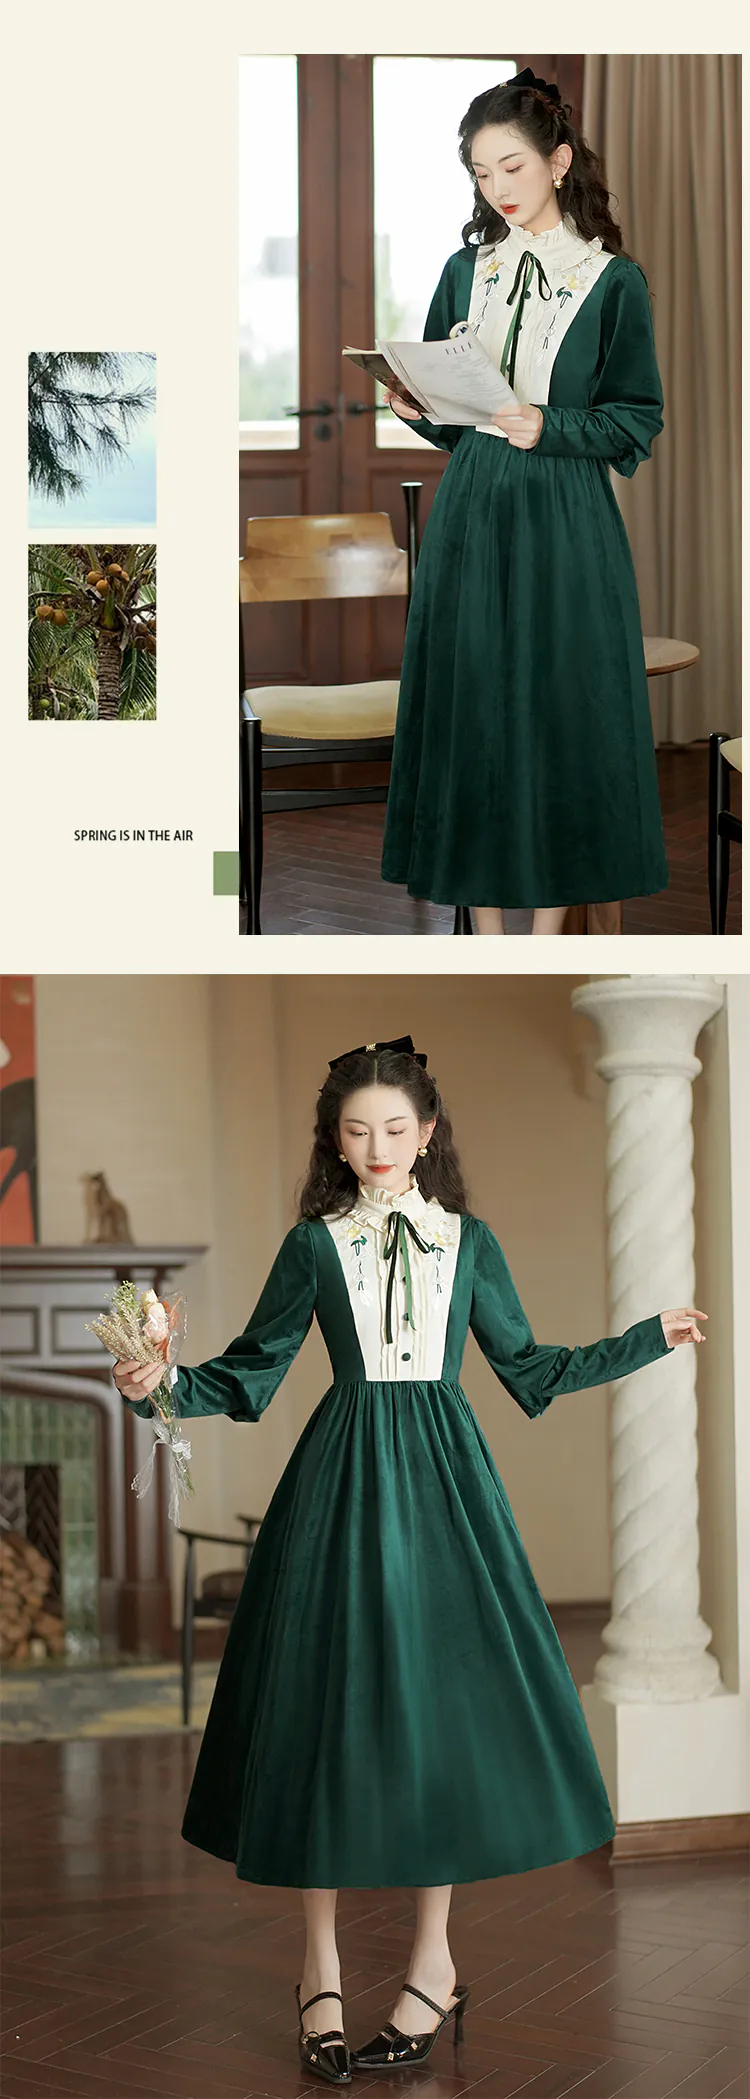 Chic-Vintage-Style-Green-Velvet-Ruffle-Neck-Long-Sleeve-Casual-Dress13